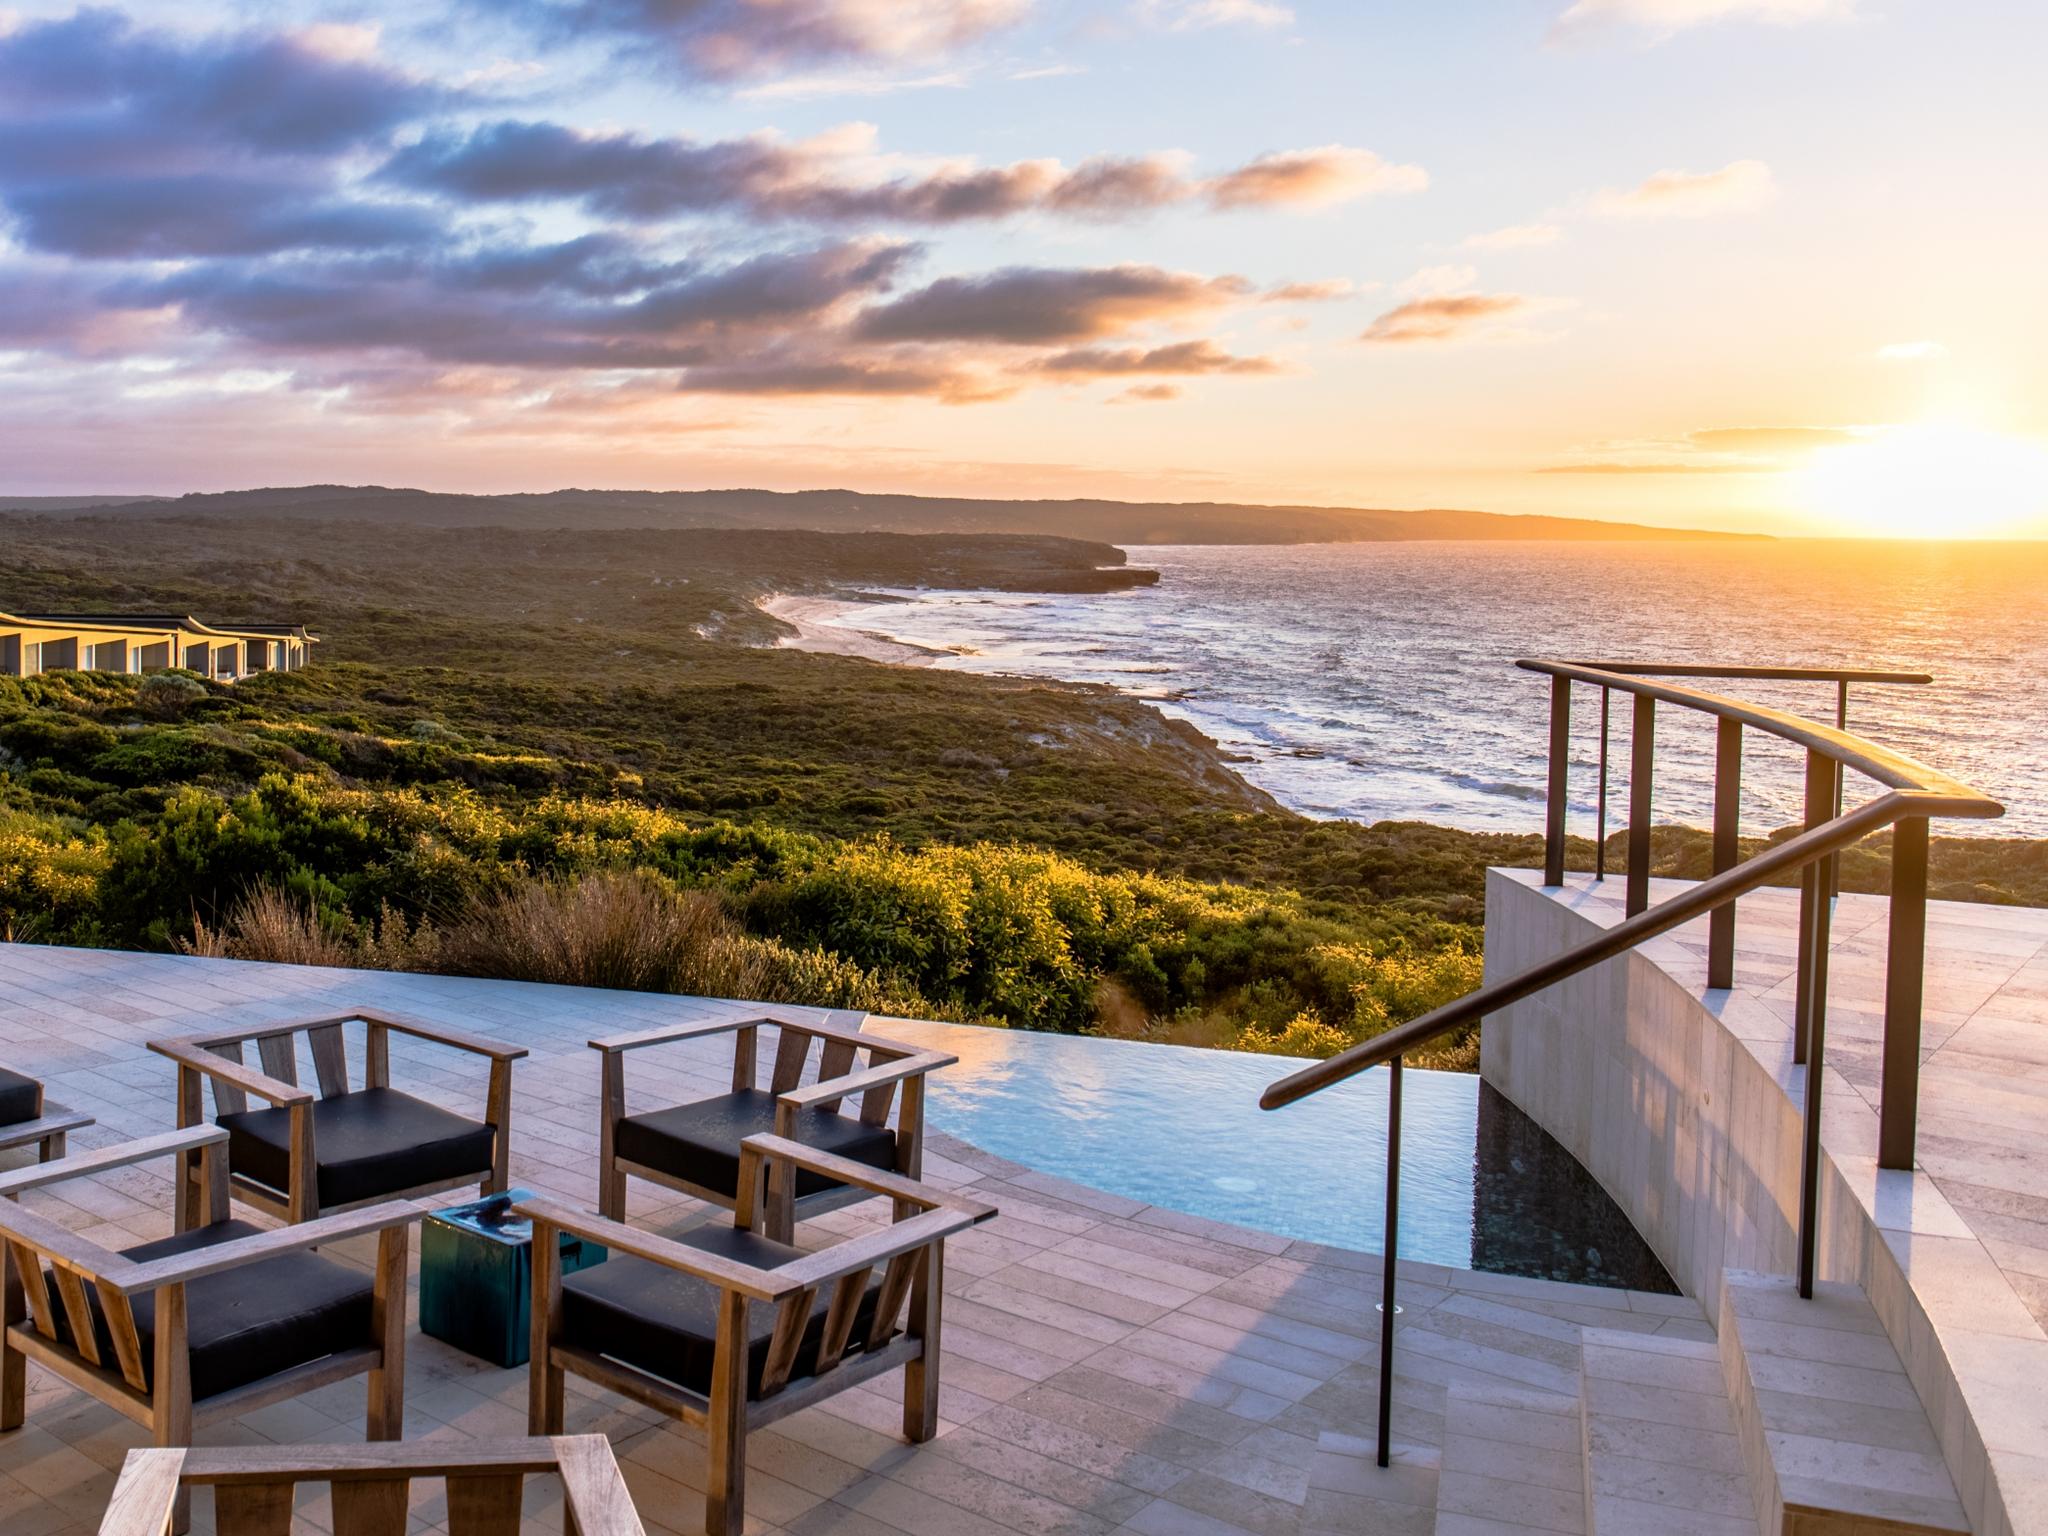 scenic view from the balcony of Southern Ocean Lodge, Kangaroo Island, Australia | Wedifys